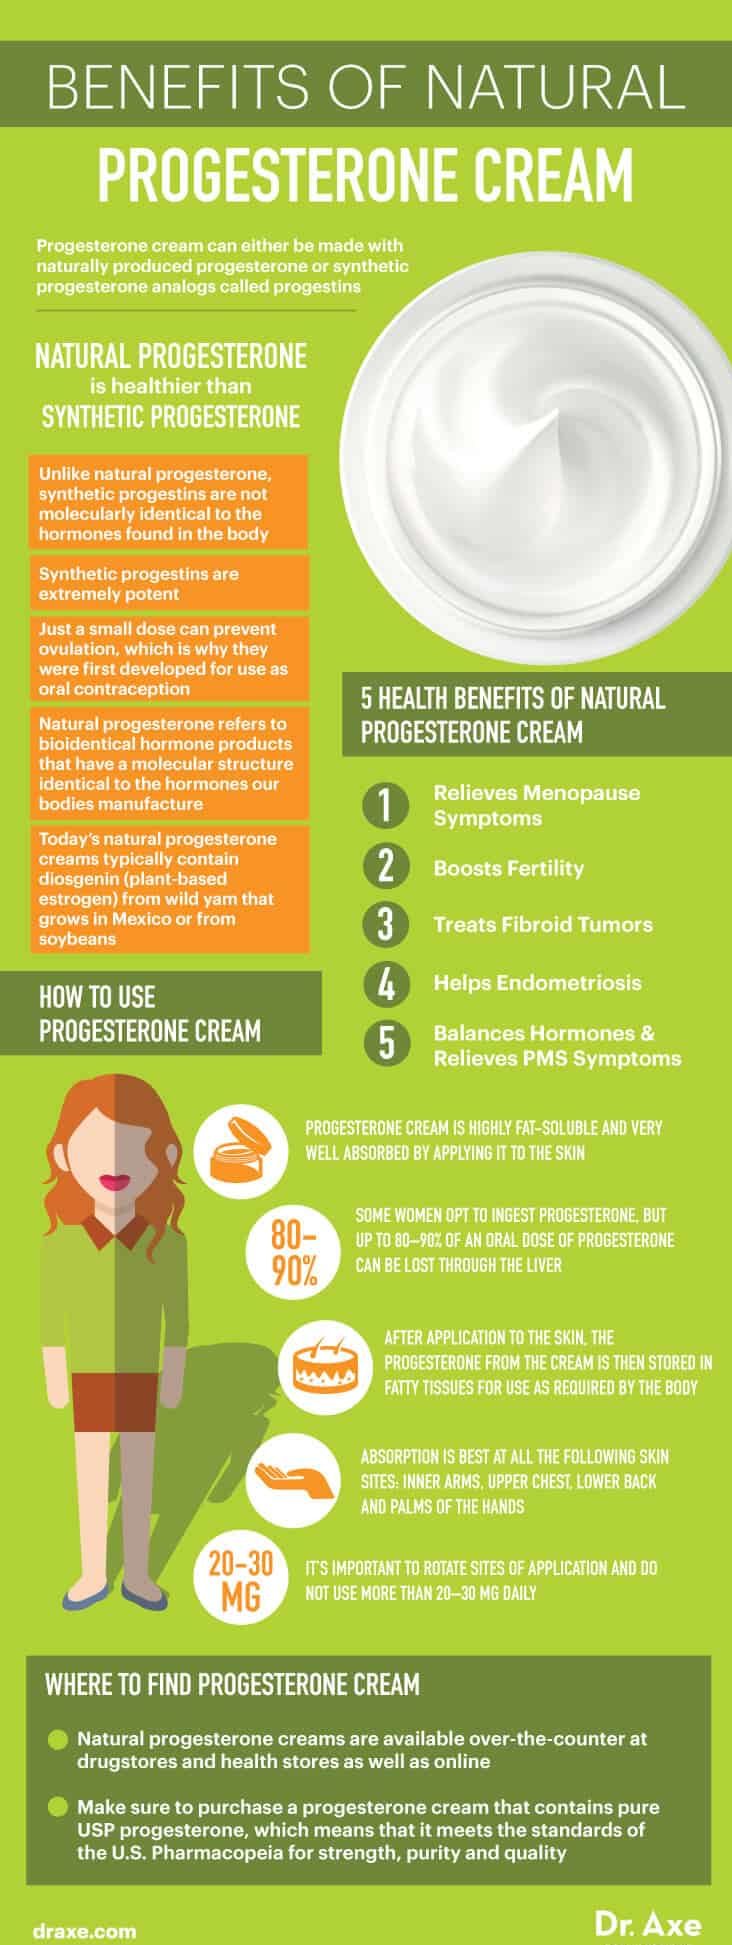 Progesterone benefits - Dr. Axe